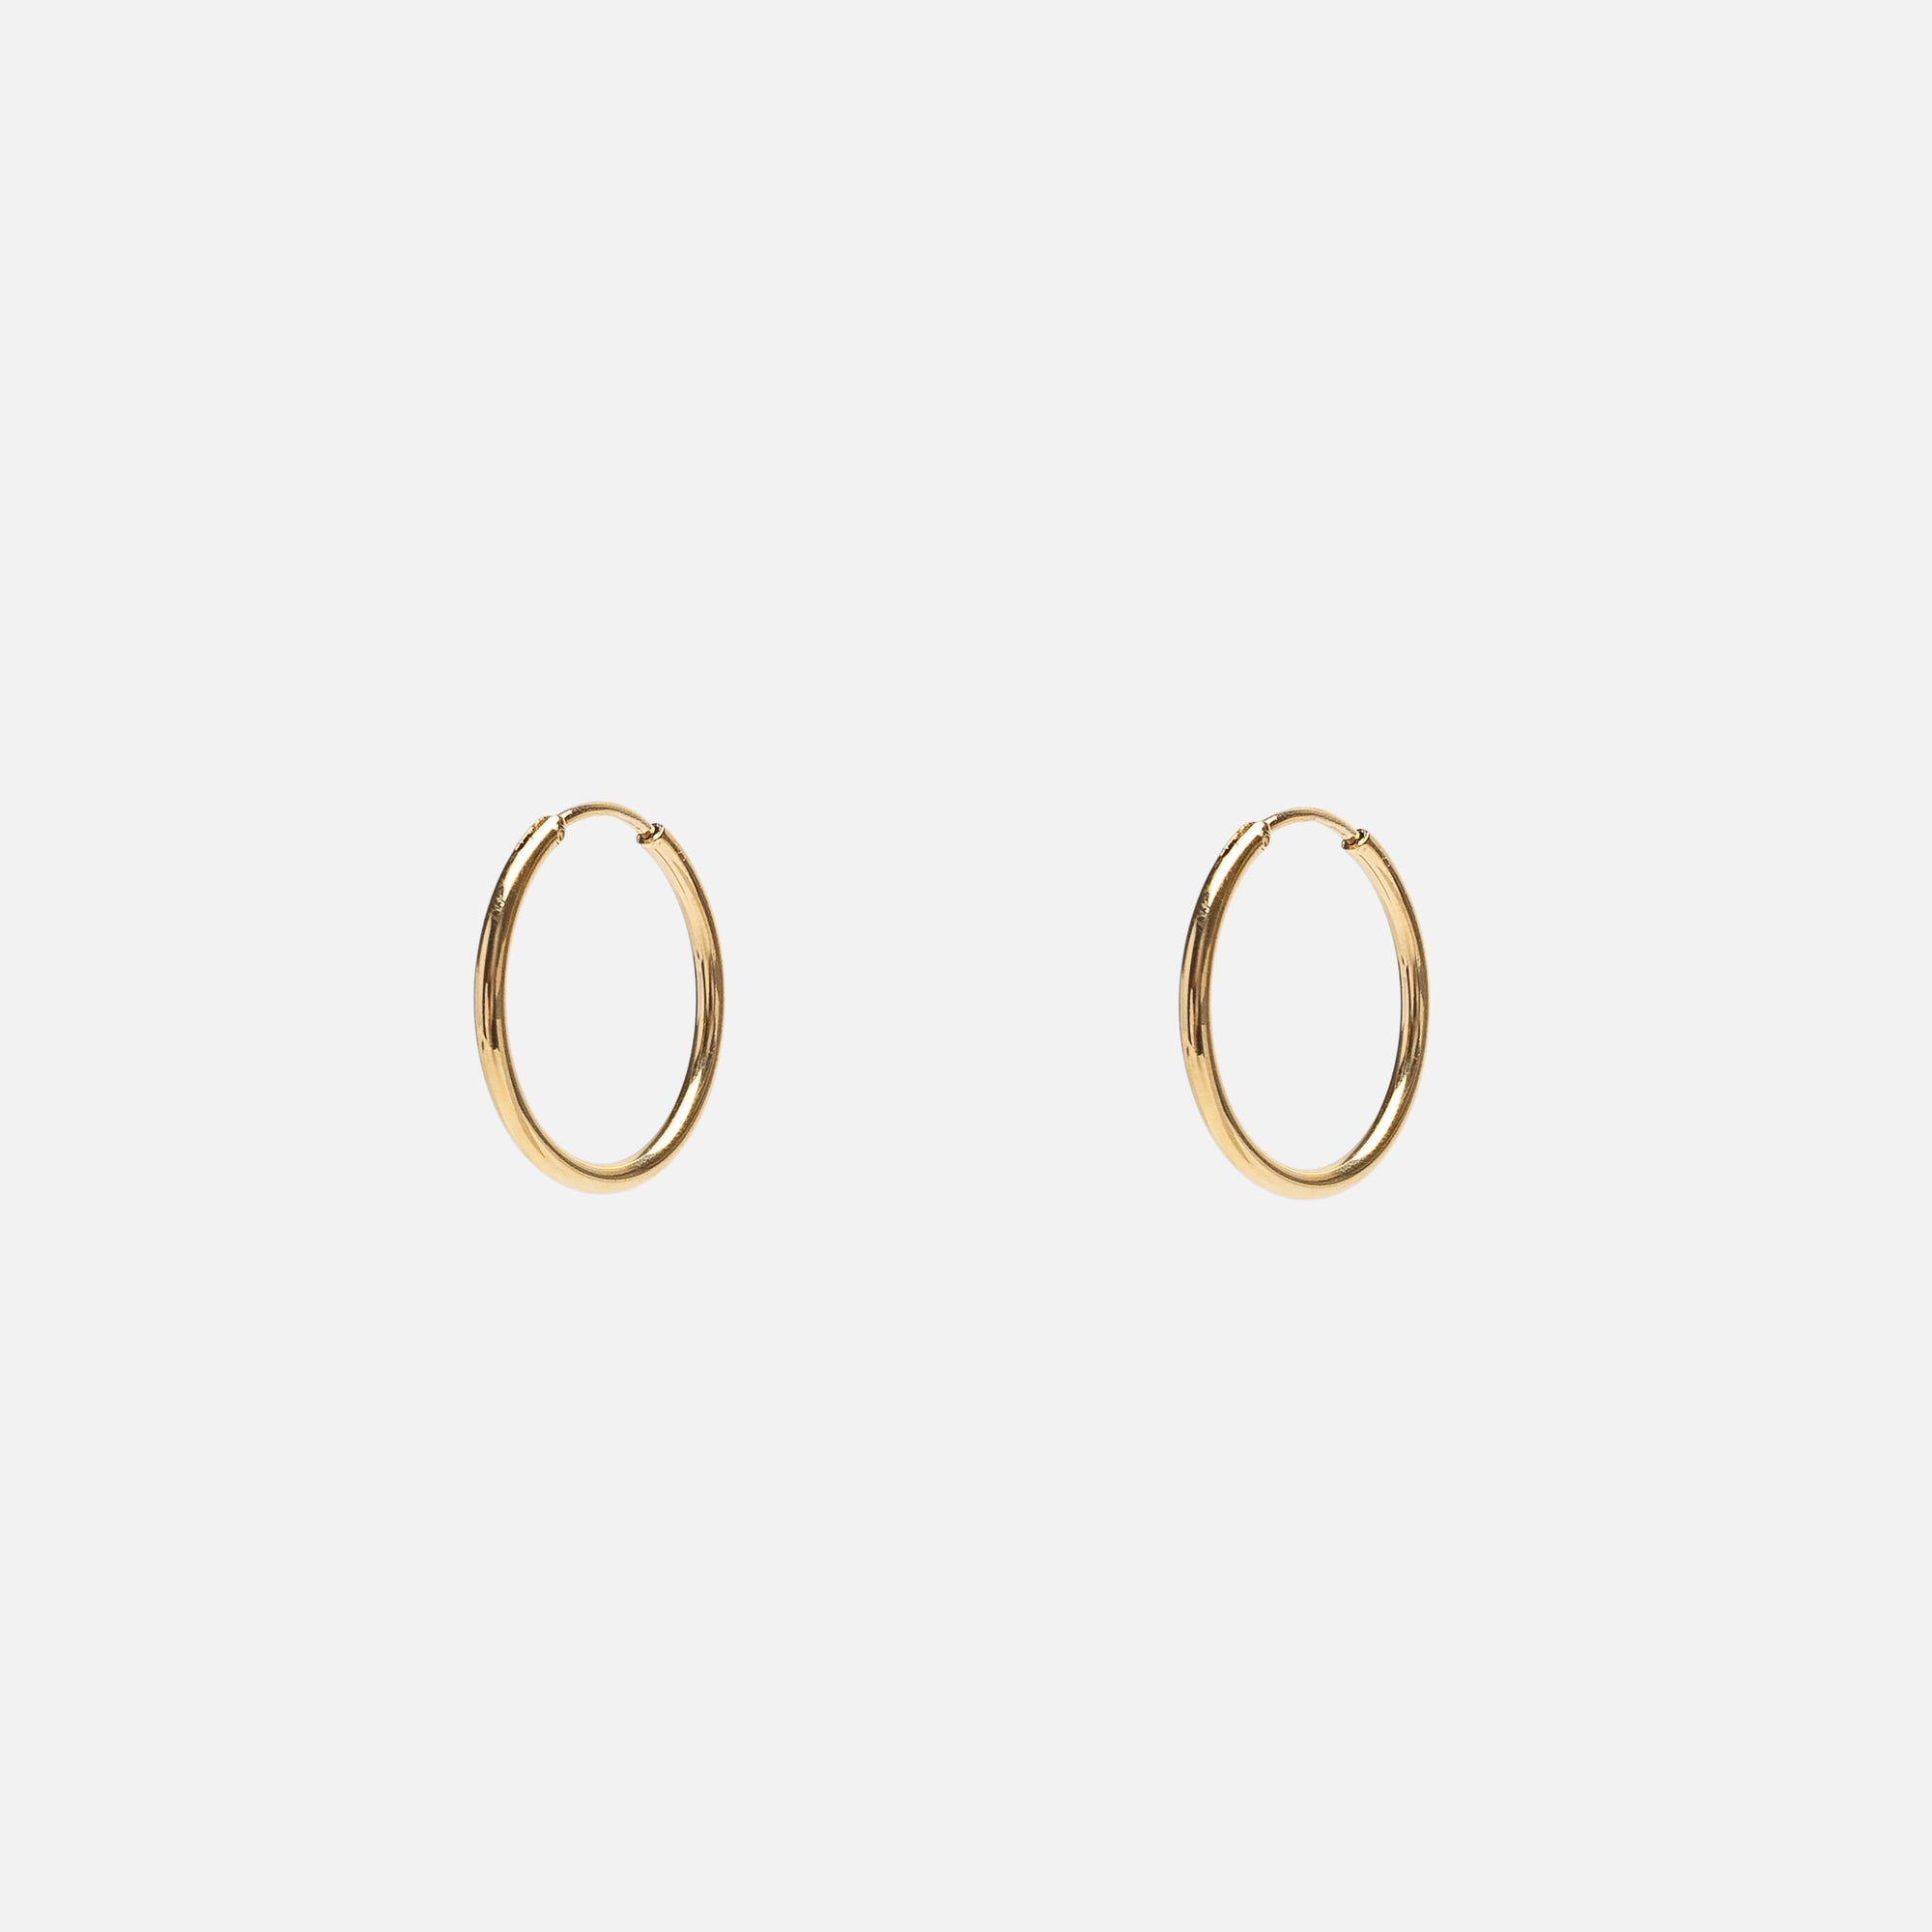 24mm stainless steel golden hoop earrings  